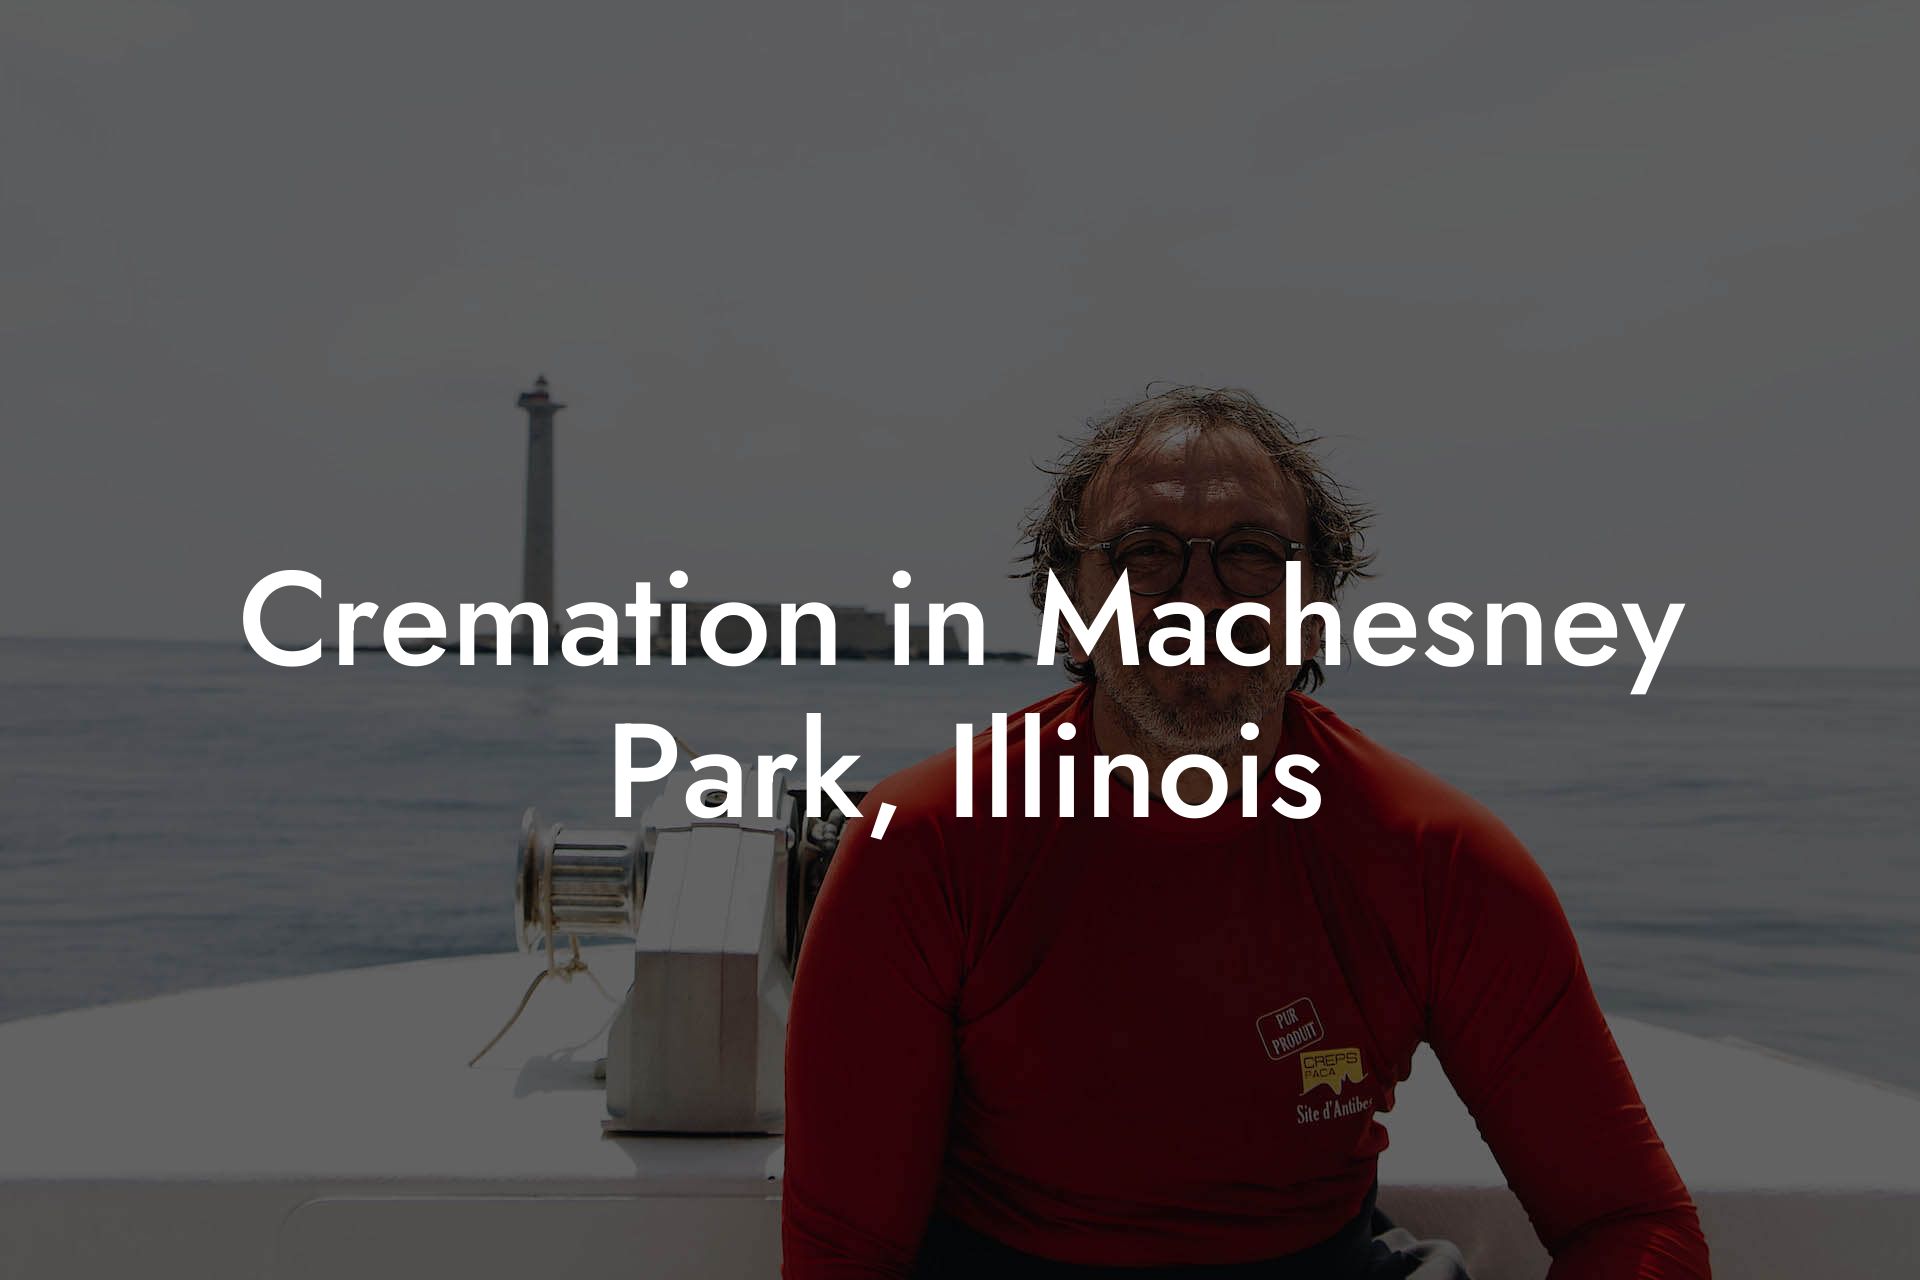 Cremation in Machesney Park, Illinois